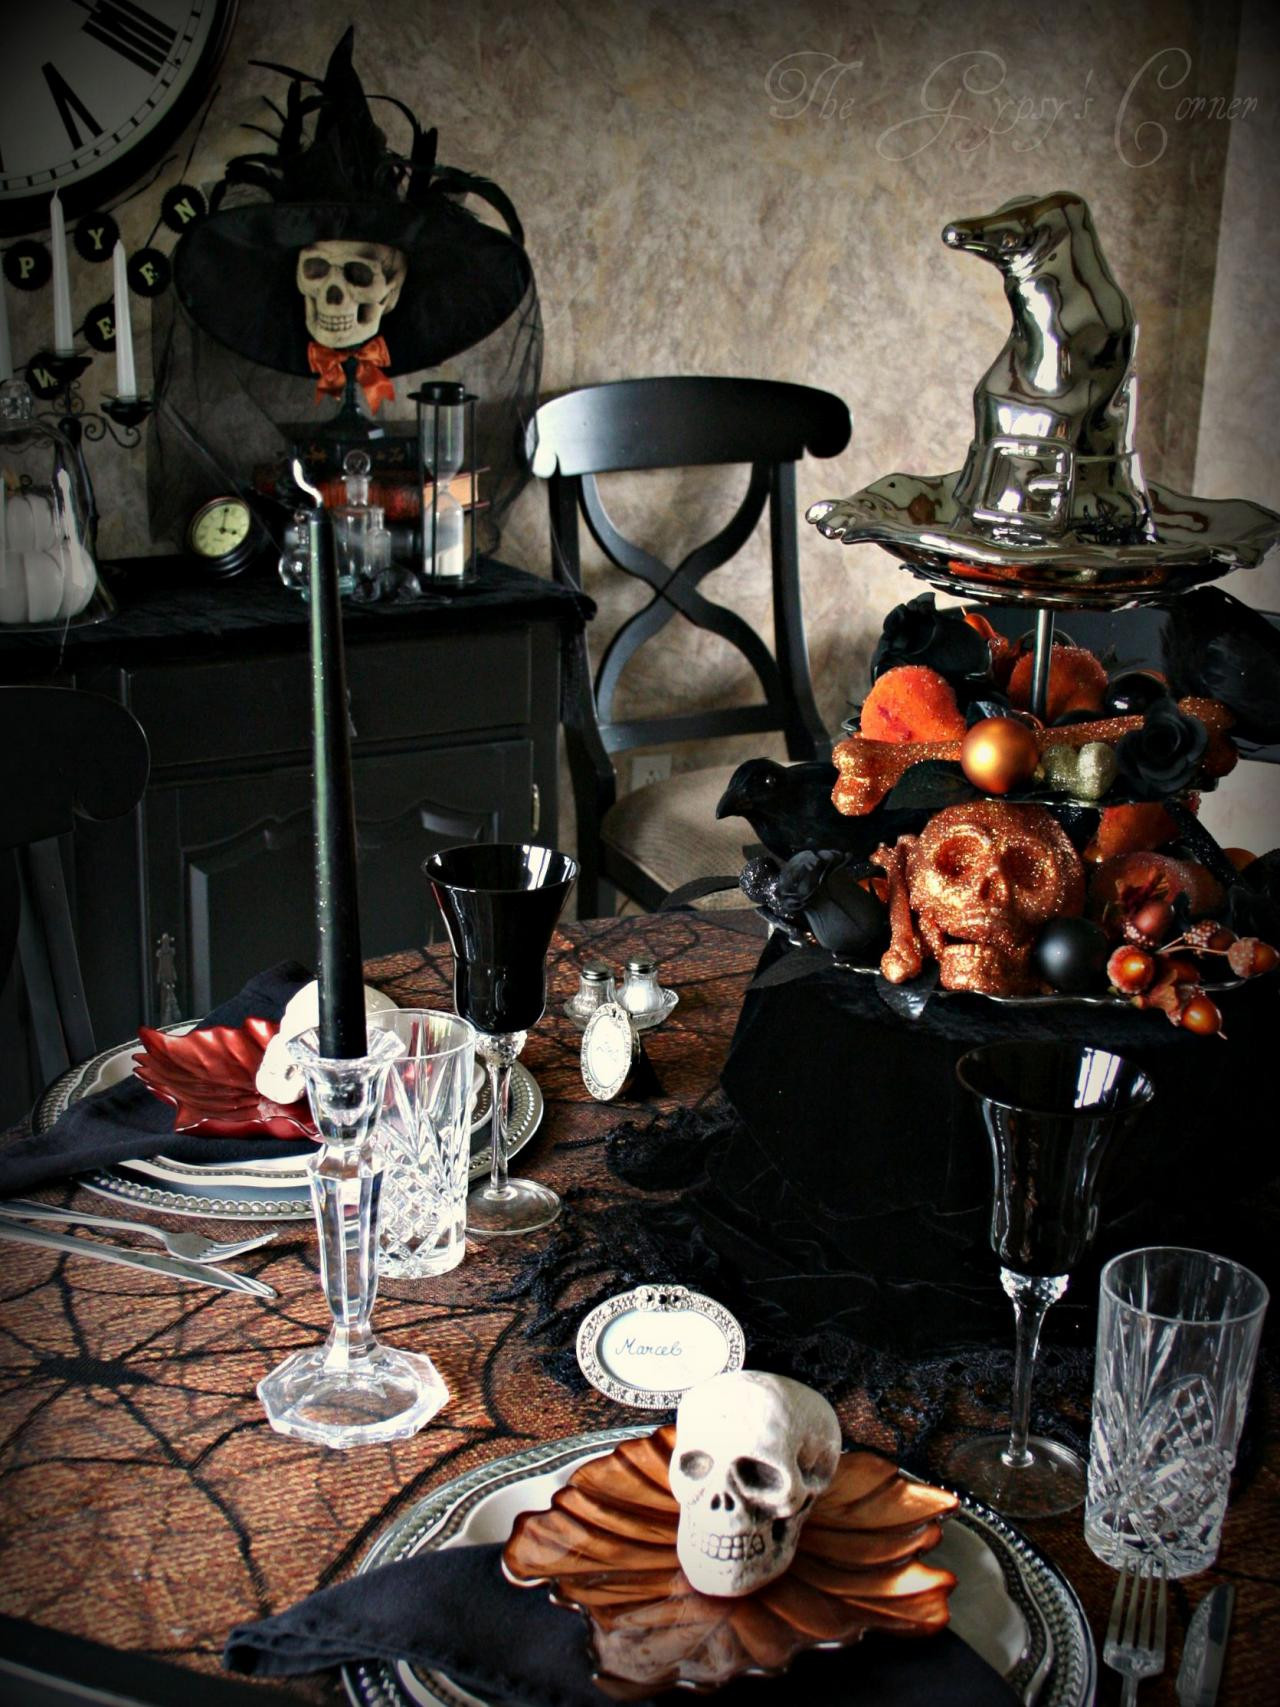 Halloween Decorations Party Ideas
 plete List of Halloween Decorations Ideas In Your Home